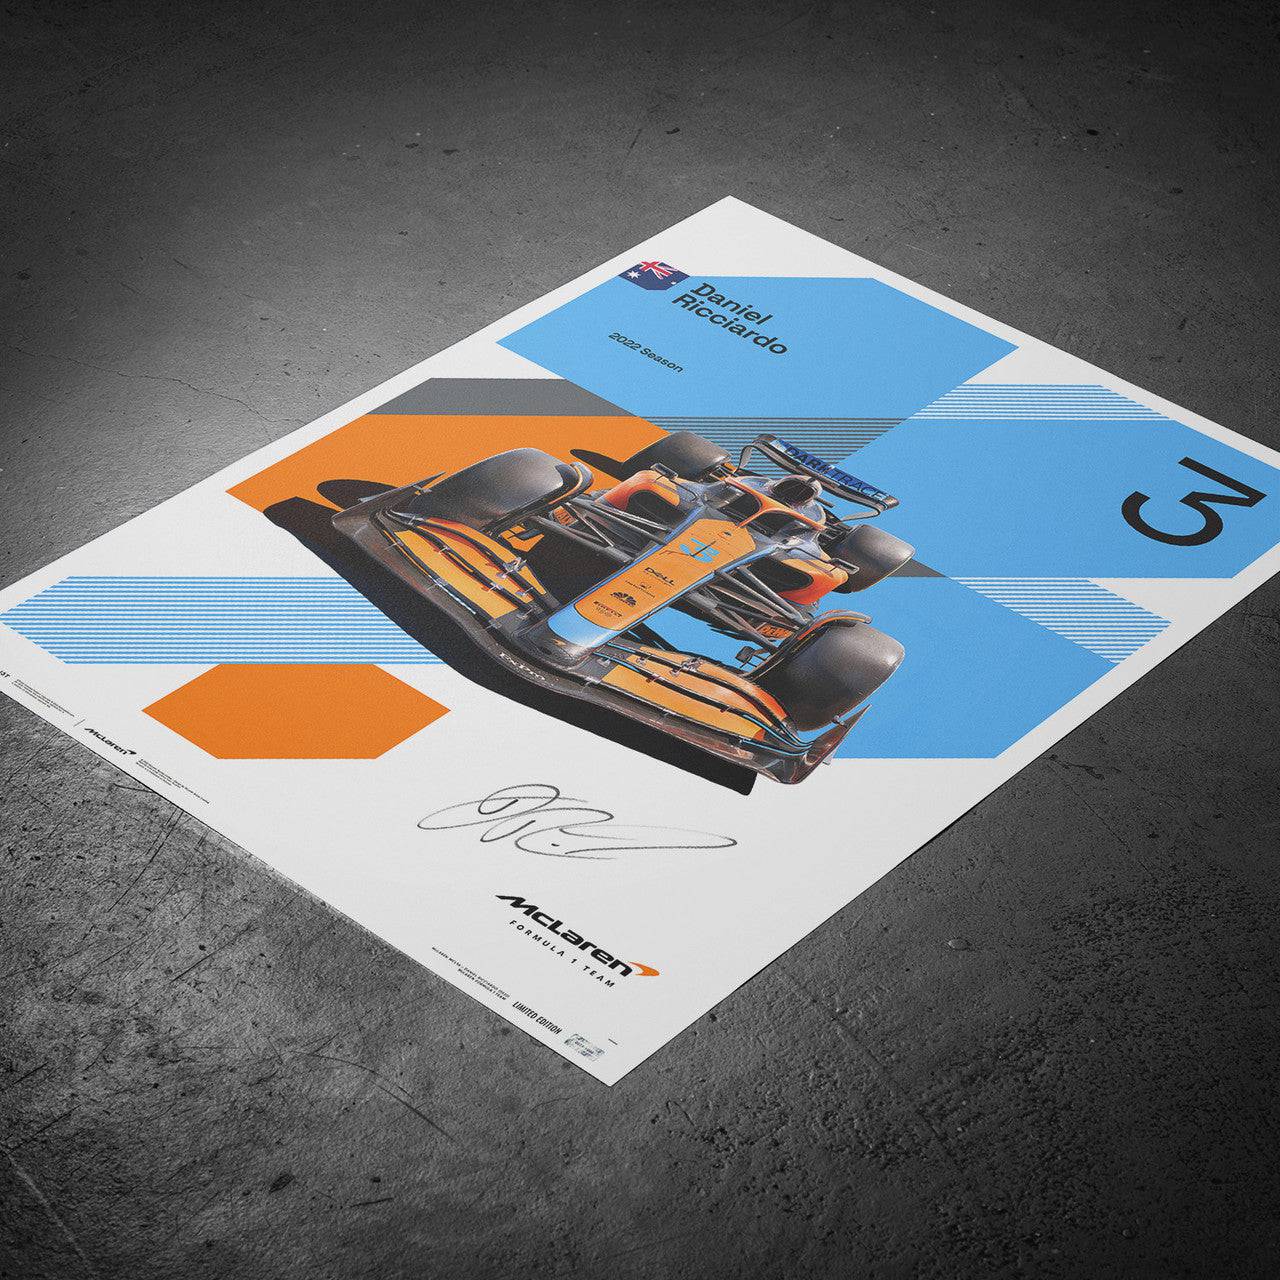 Signed by Daniel Ricciardo - McLaren Formula 1 Team - Daniel Ricciardo - 2022 | Limited Edition